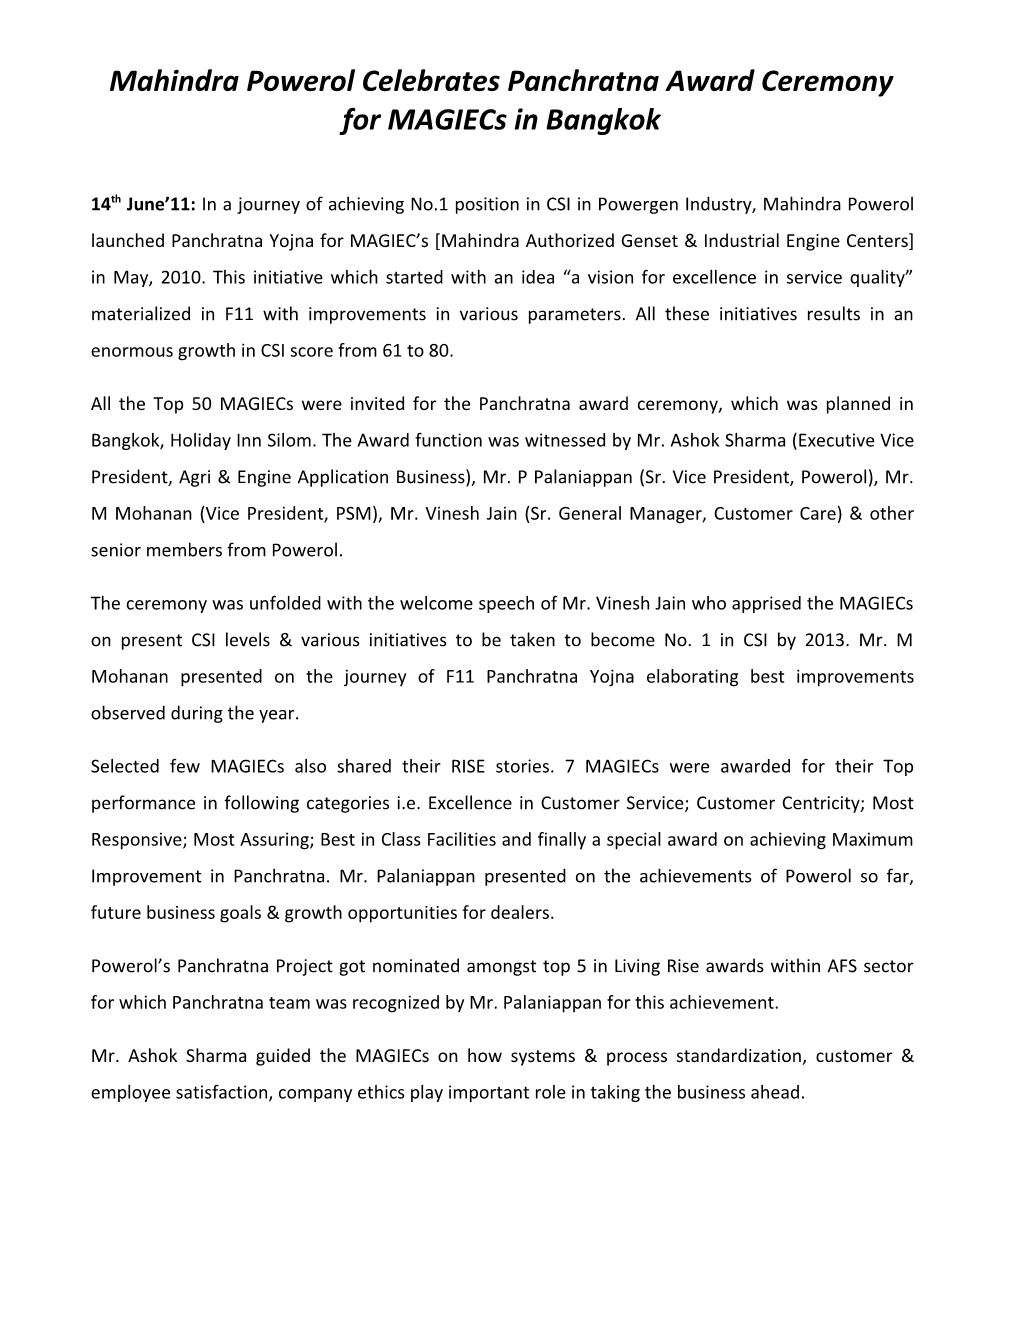 Mahindra Powerol Celebrates Panchratna Award Ceremony for Magiecs in Bangkok